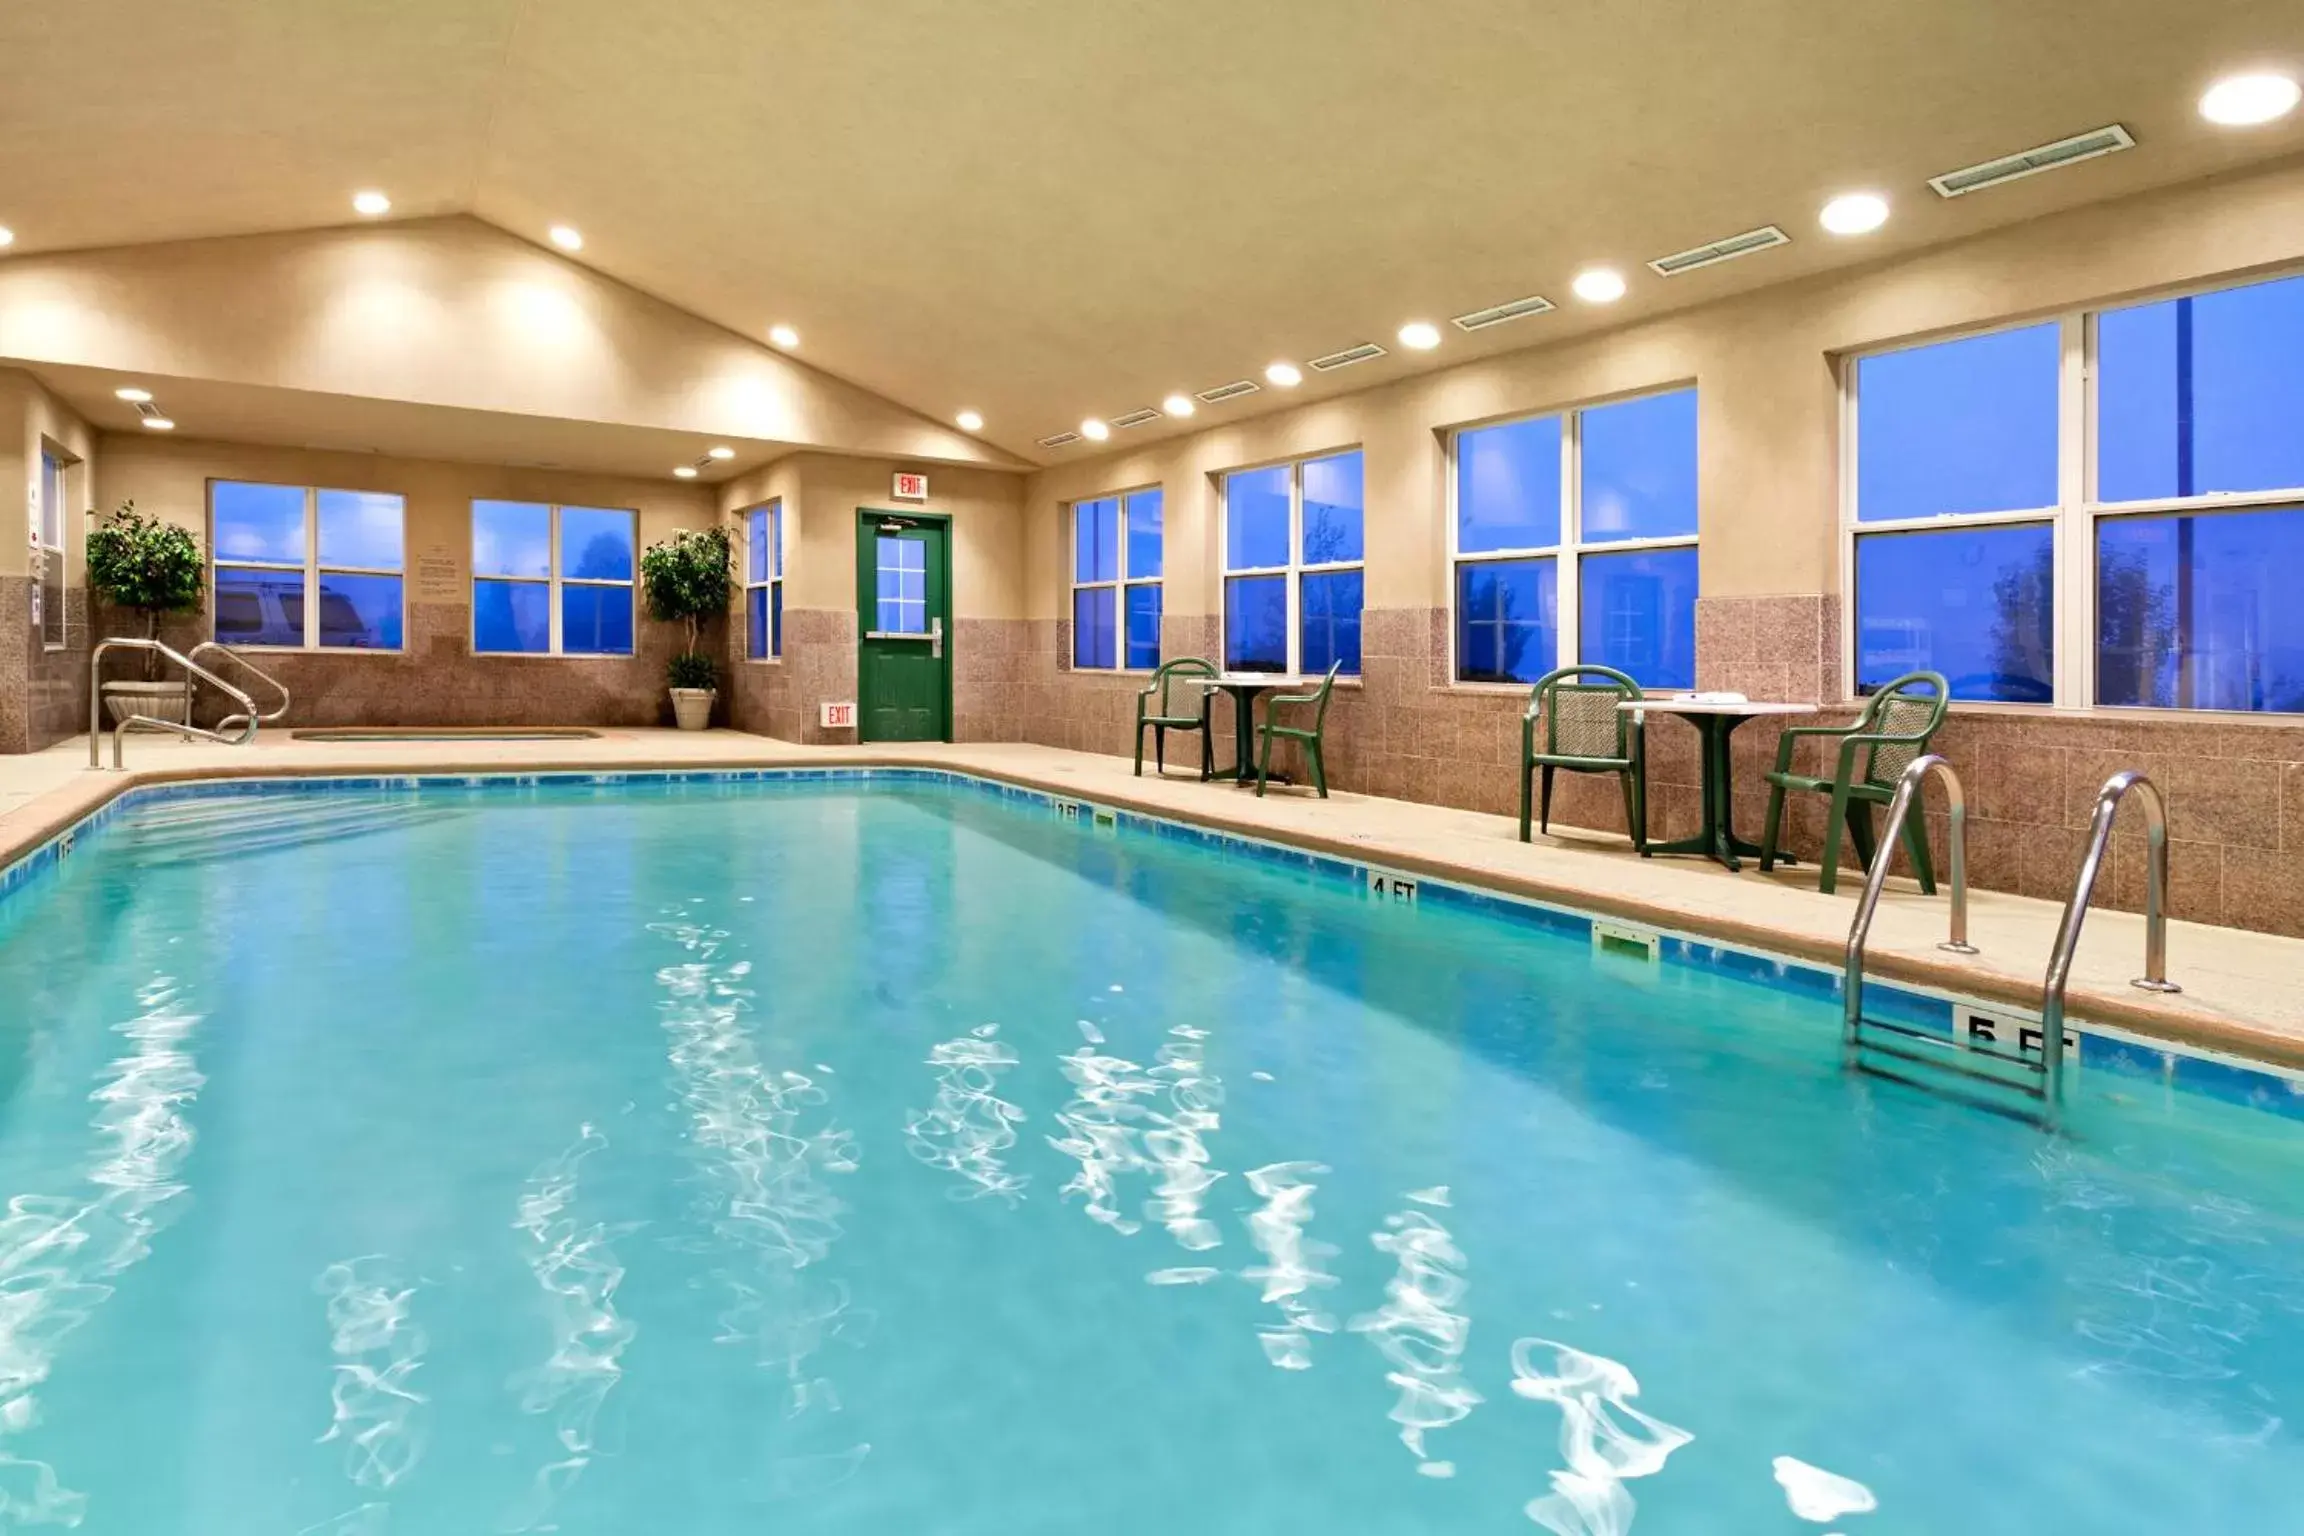 Swimming Pool in Country Inn & Suites by Radisson, Frackville (Pottsville), PA